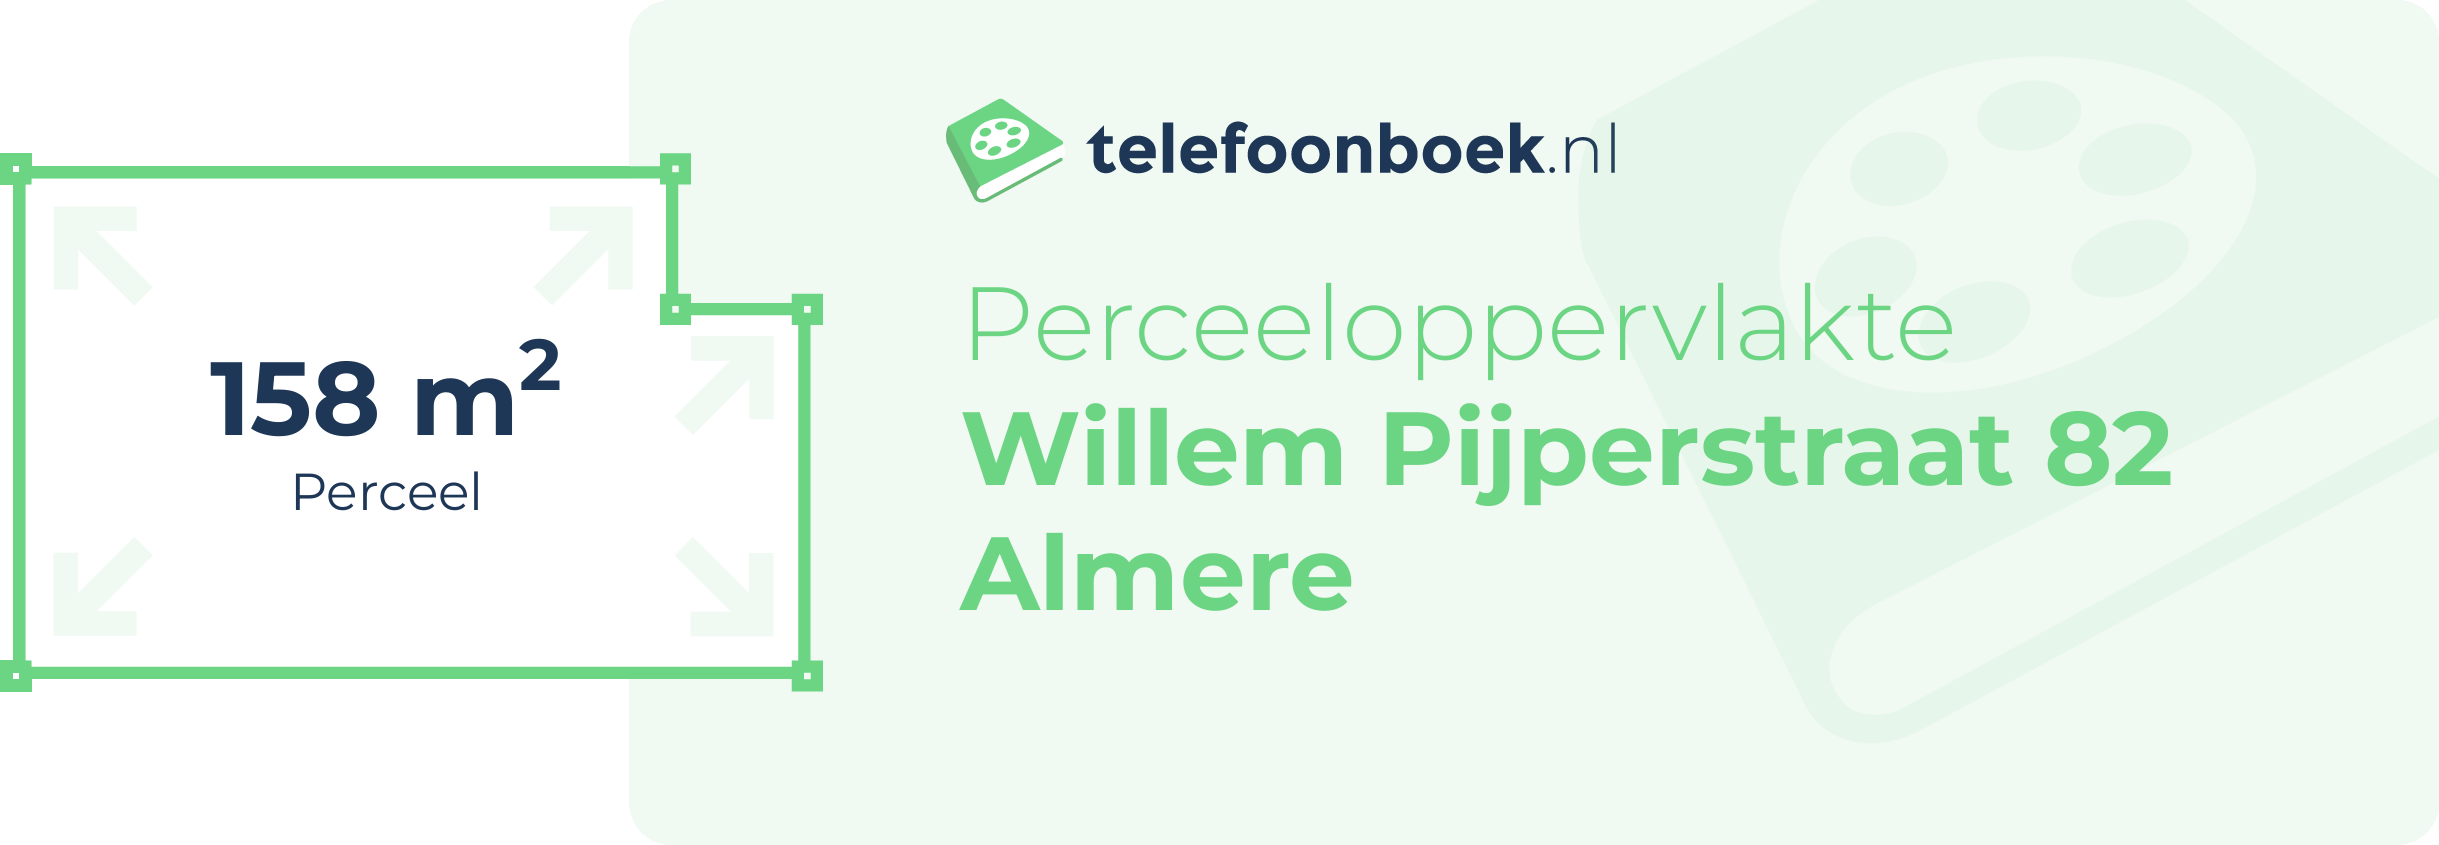 Perceeloppervlakte Willem Pijperstraat 82 Almere